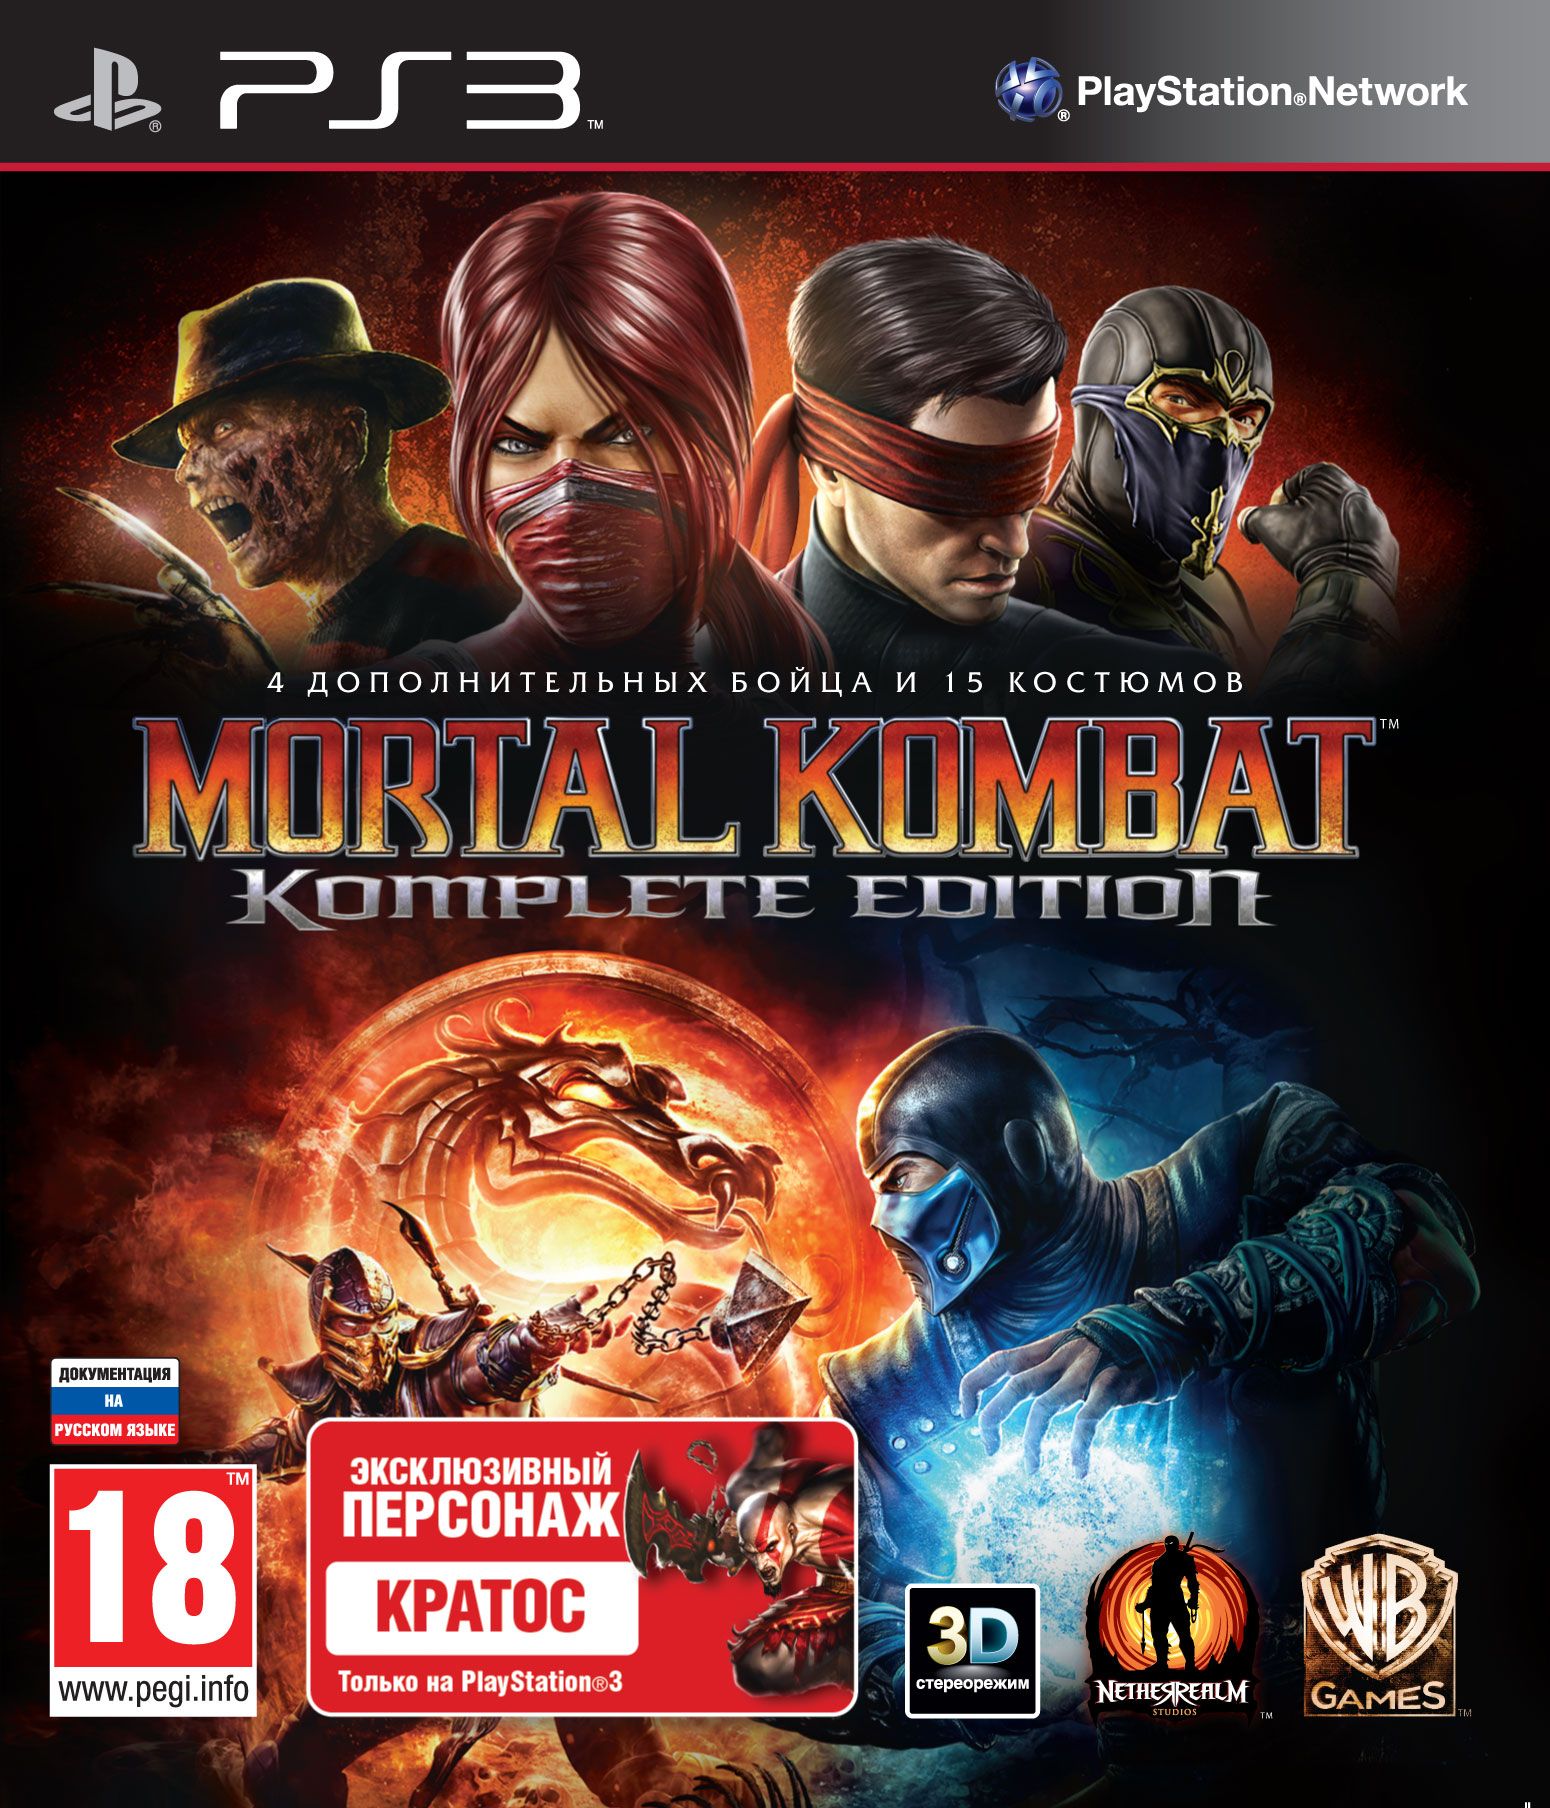 download mortal kombat ps3 x